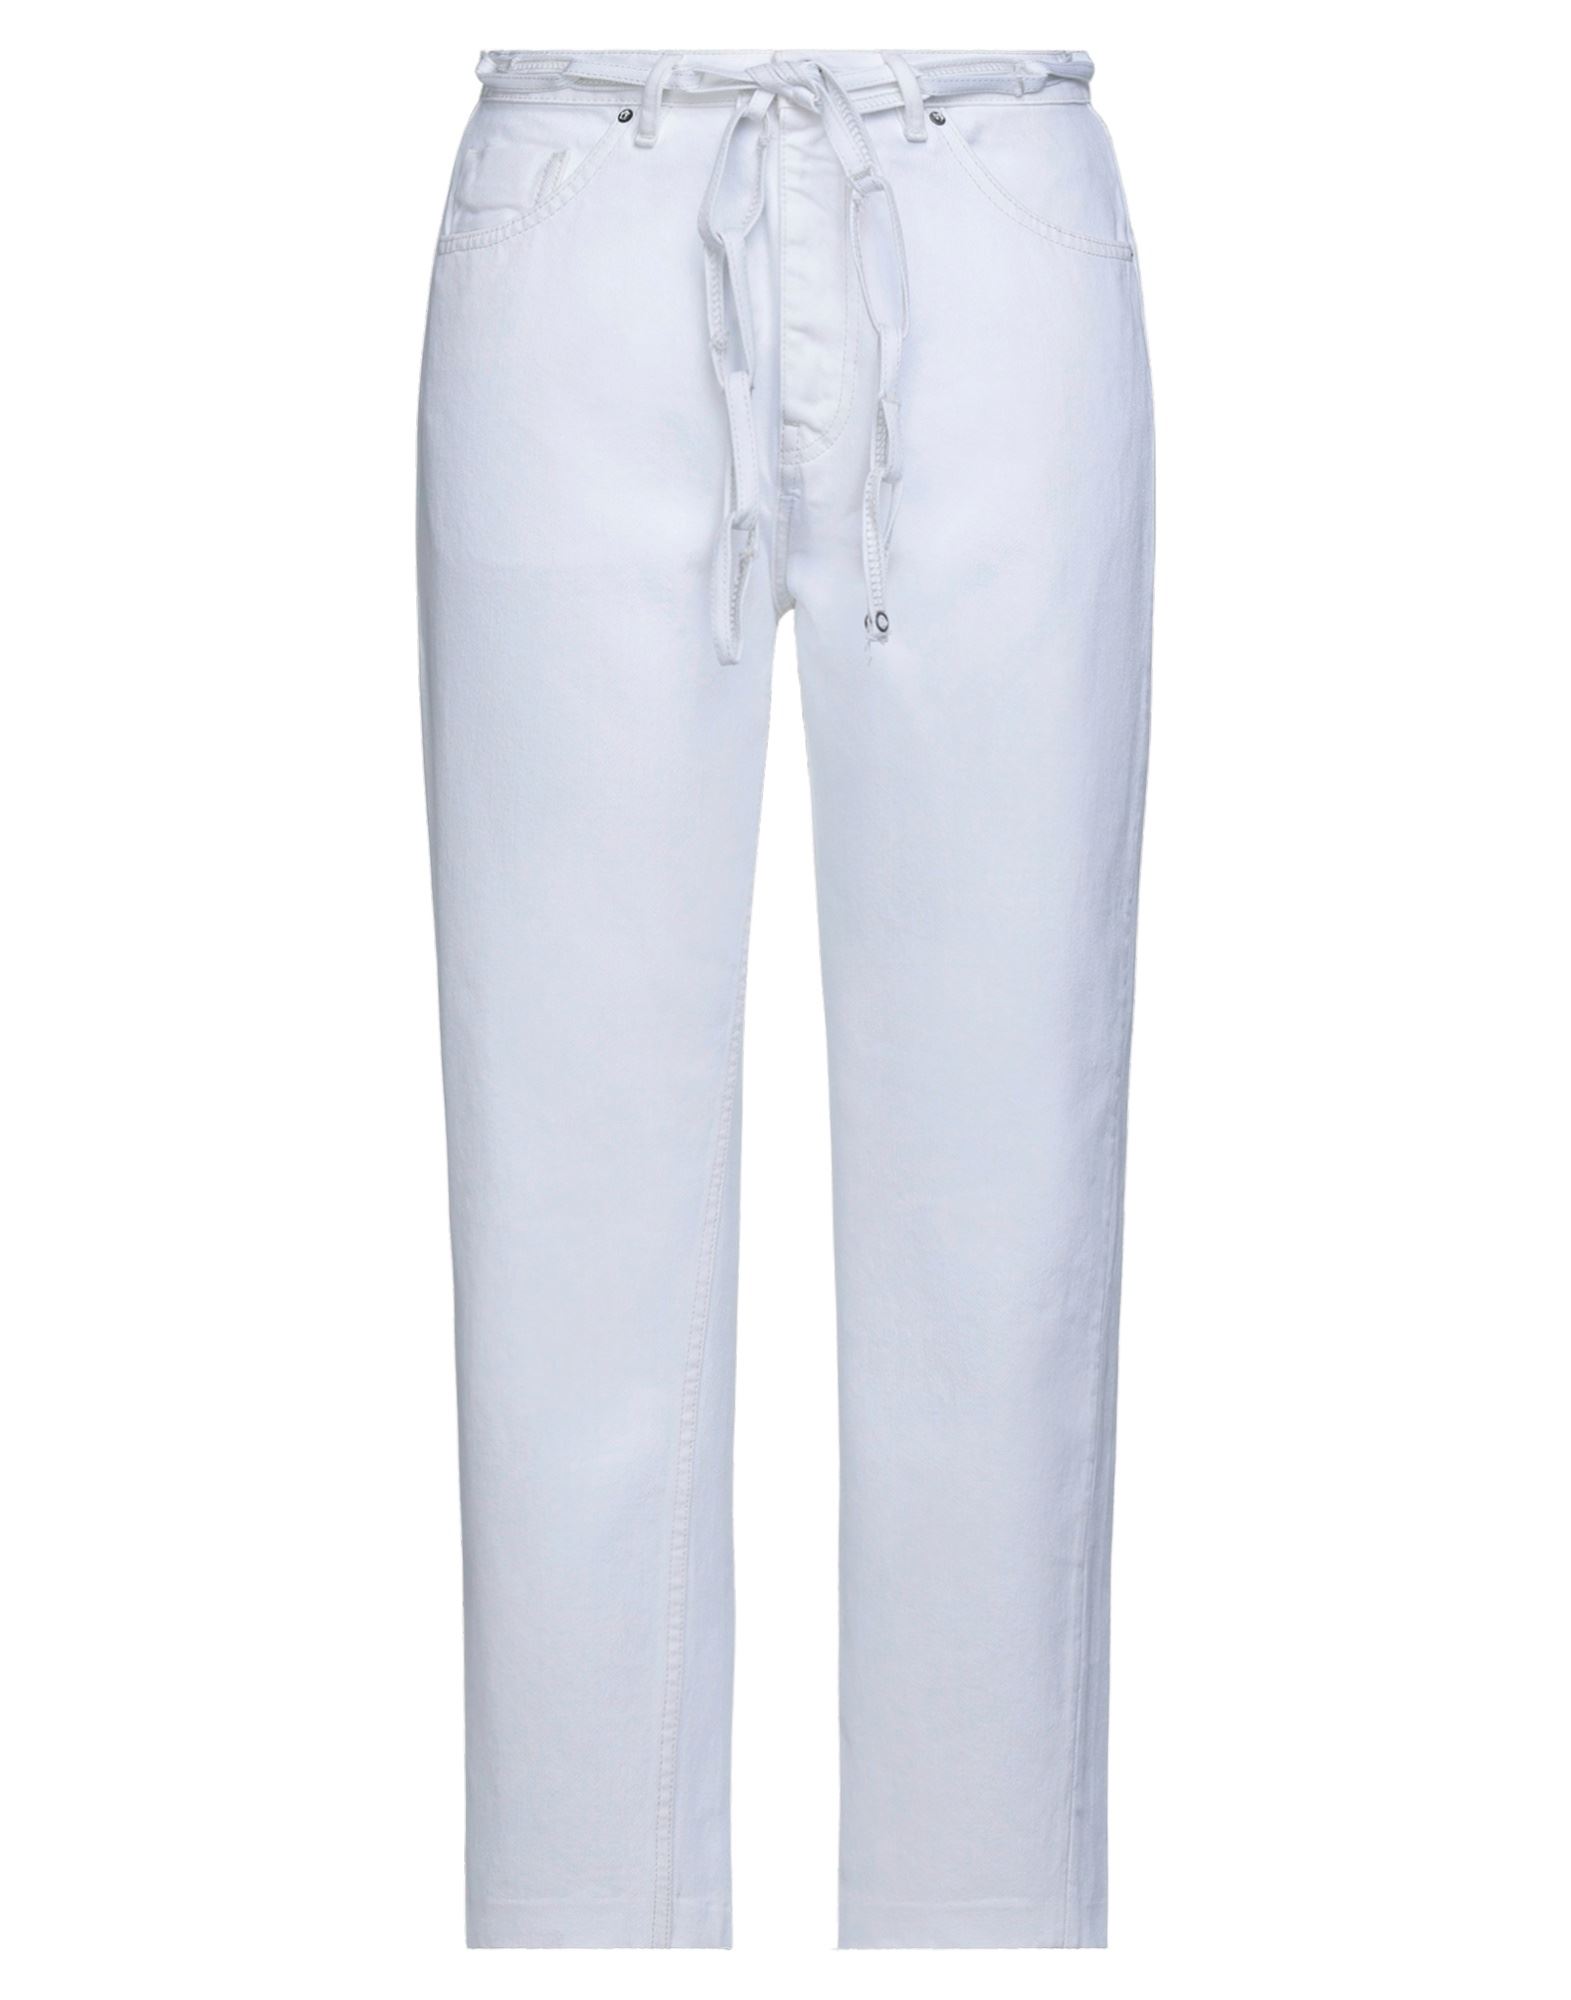 HAIKURE Jeanshose Damen Weiß von HAIKURE